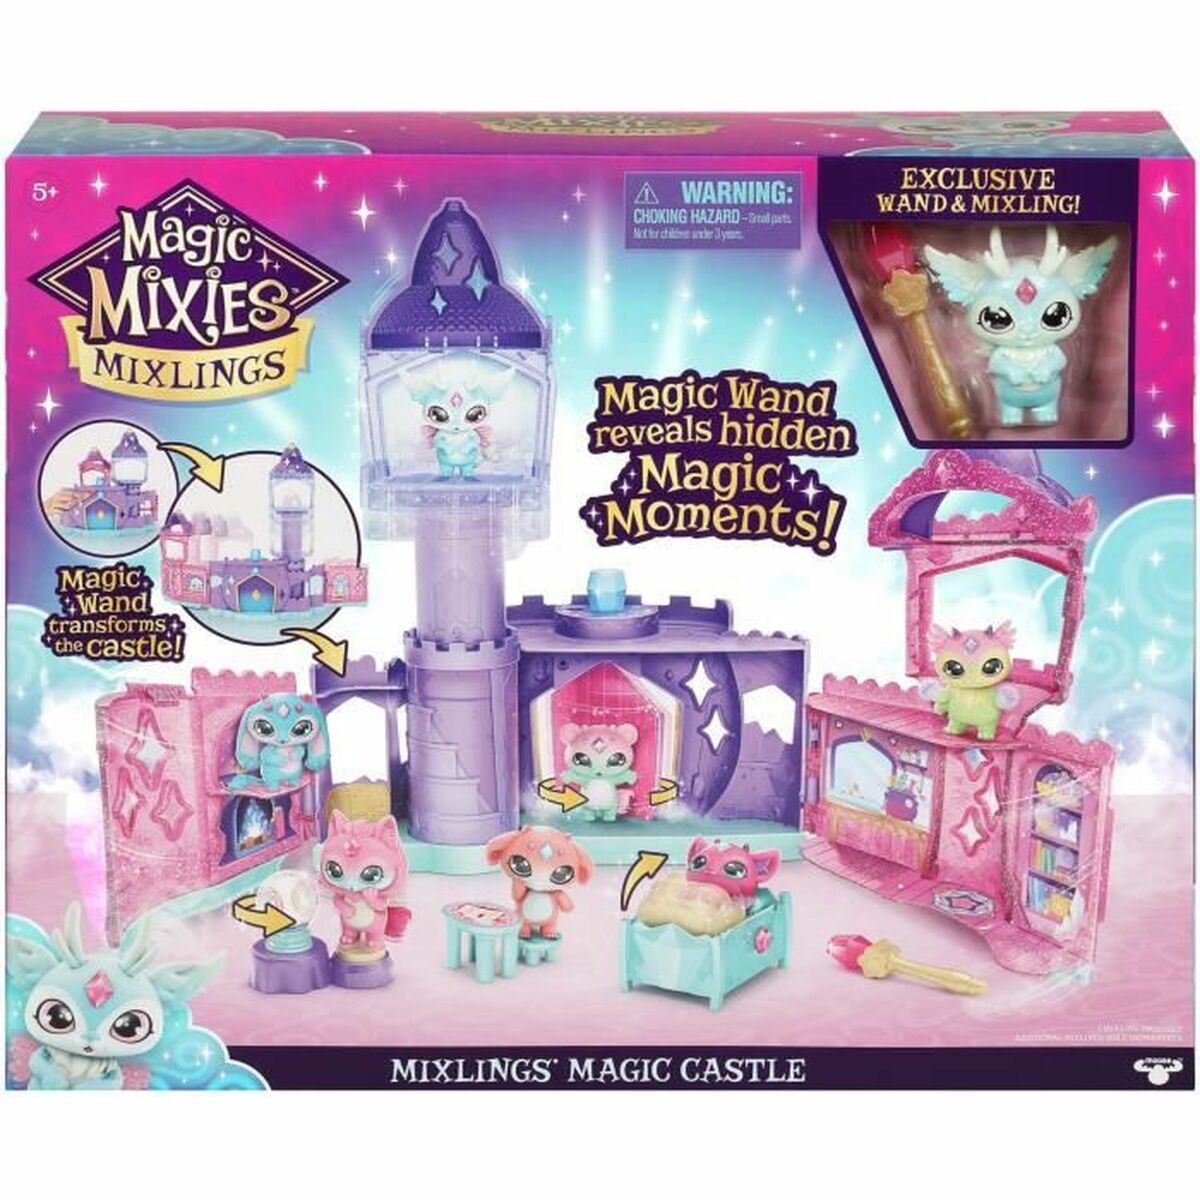 Maison miniature Moose Toys Magic Mixies Mixlings Magisch Château